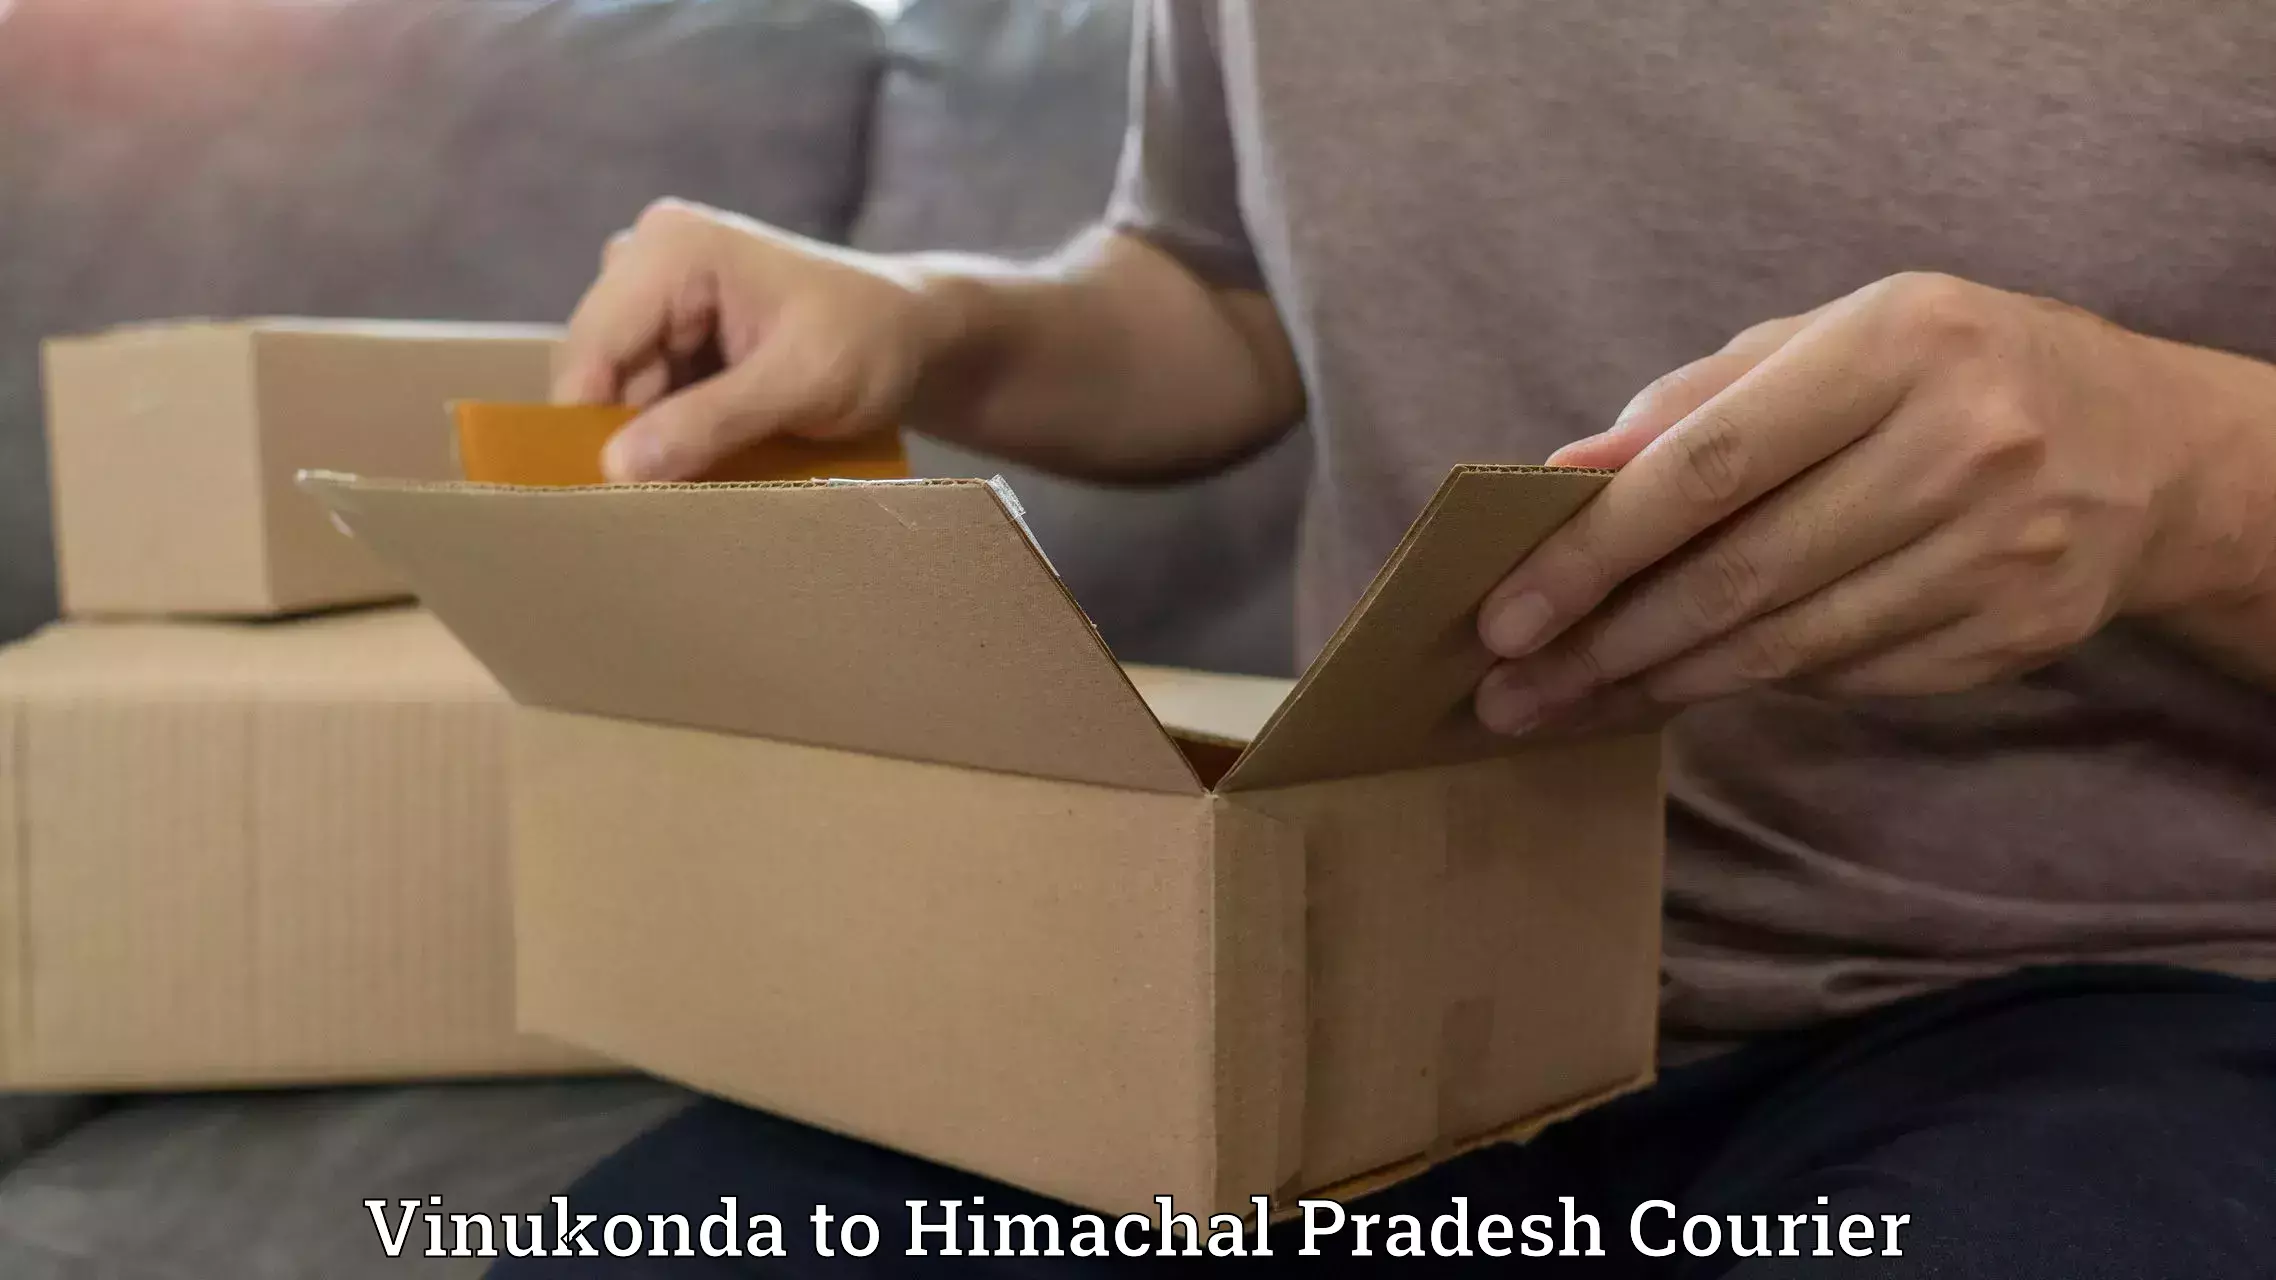 Professional courier handling Vinukonda to Una Himachal Pradesh